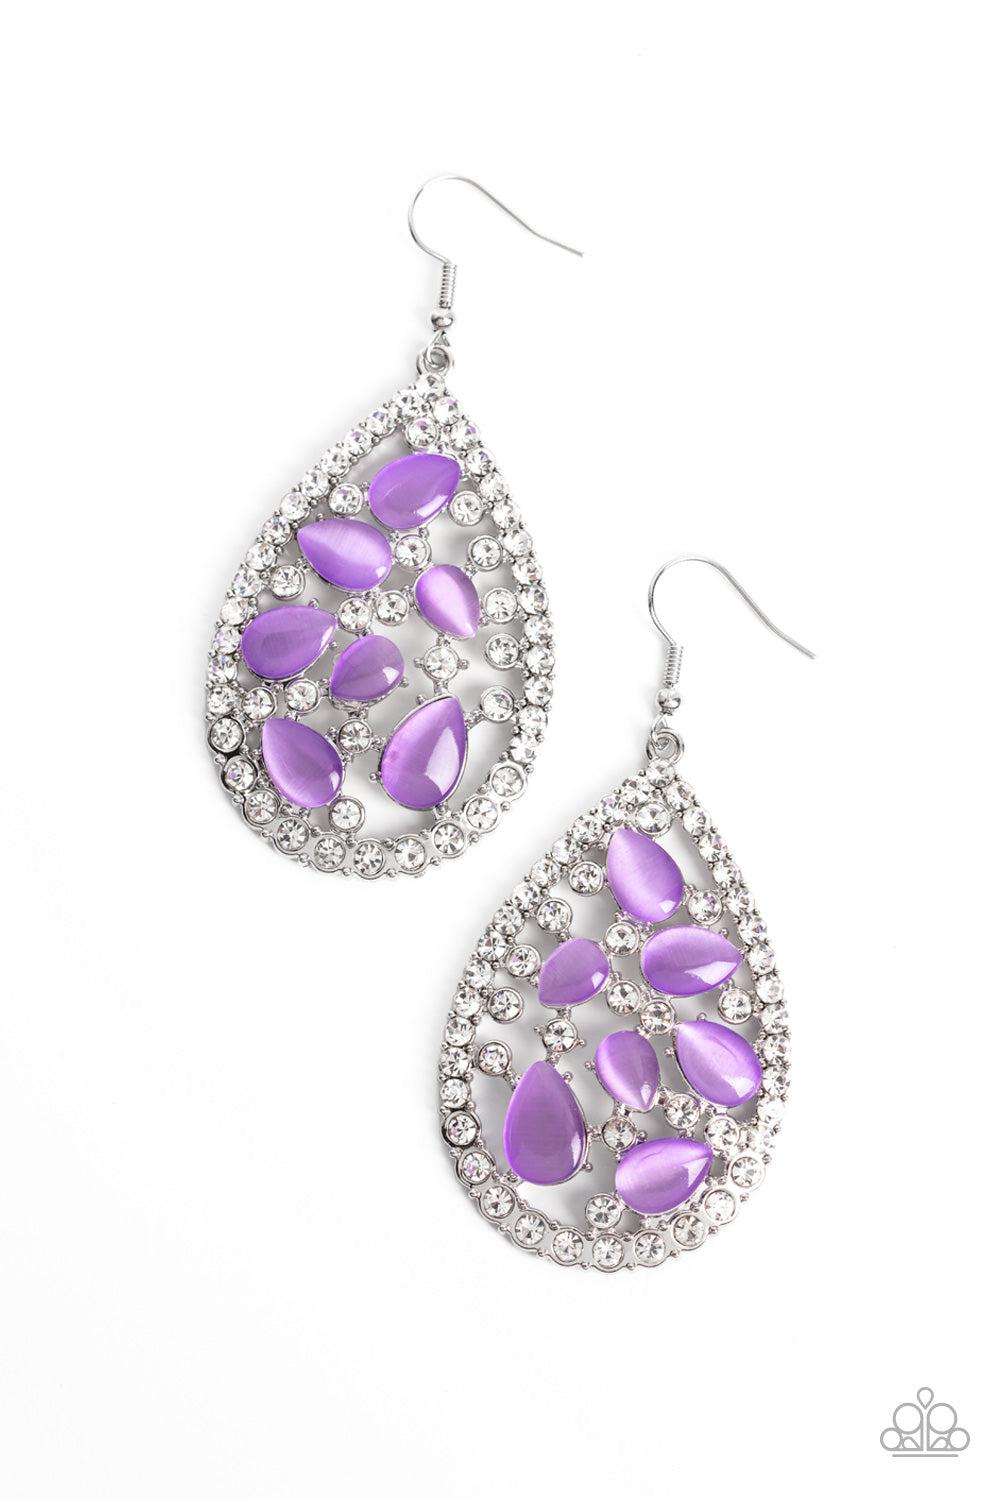 Cats Eye Class Purple Earrings - Paparazzi Accessories- lightbox - CarasShop.com - $5 Jewelry by Cara Jewels